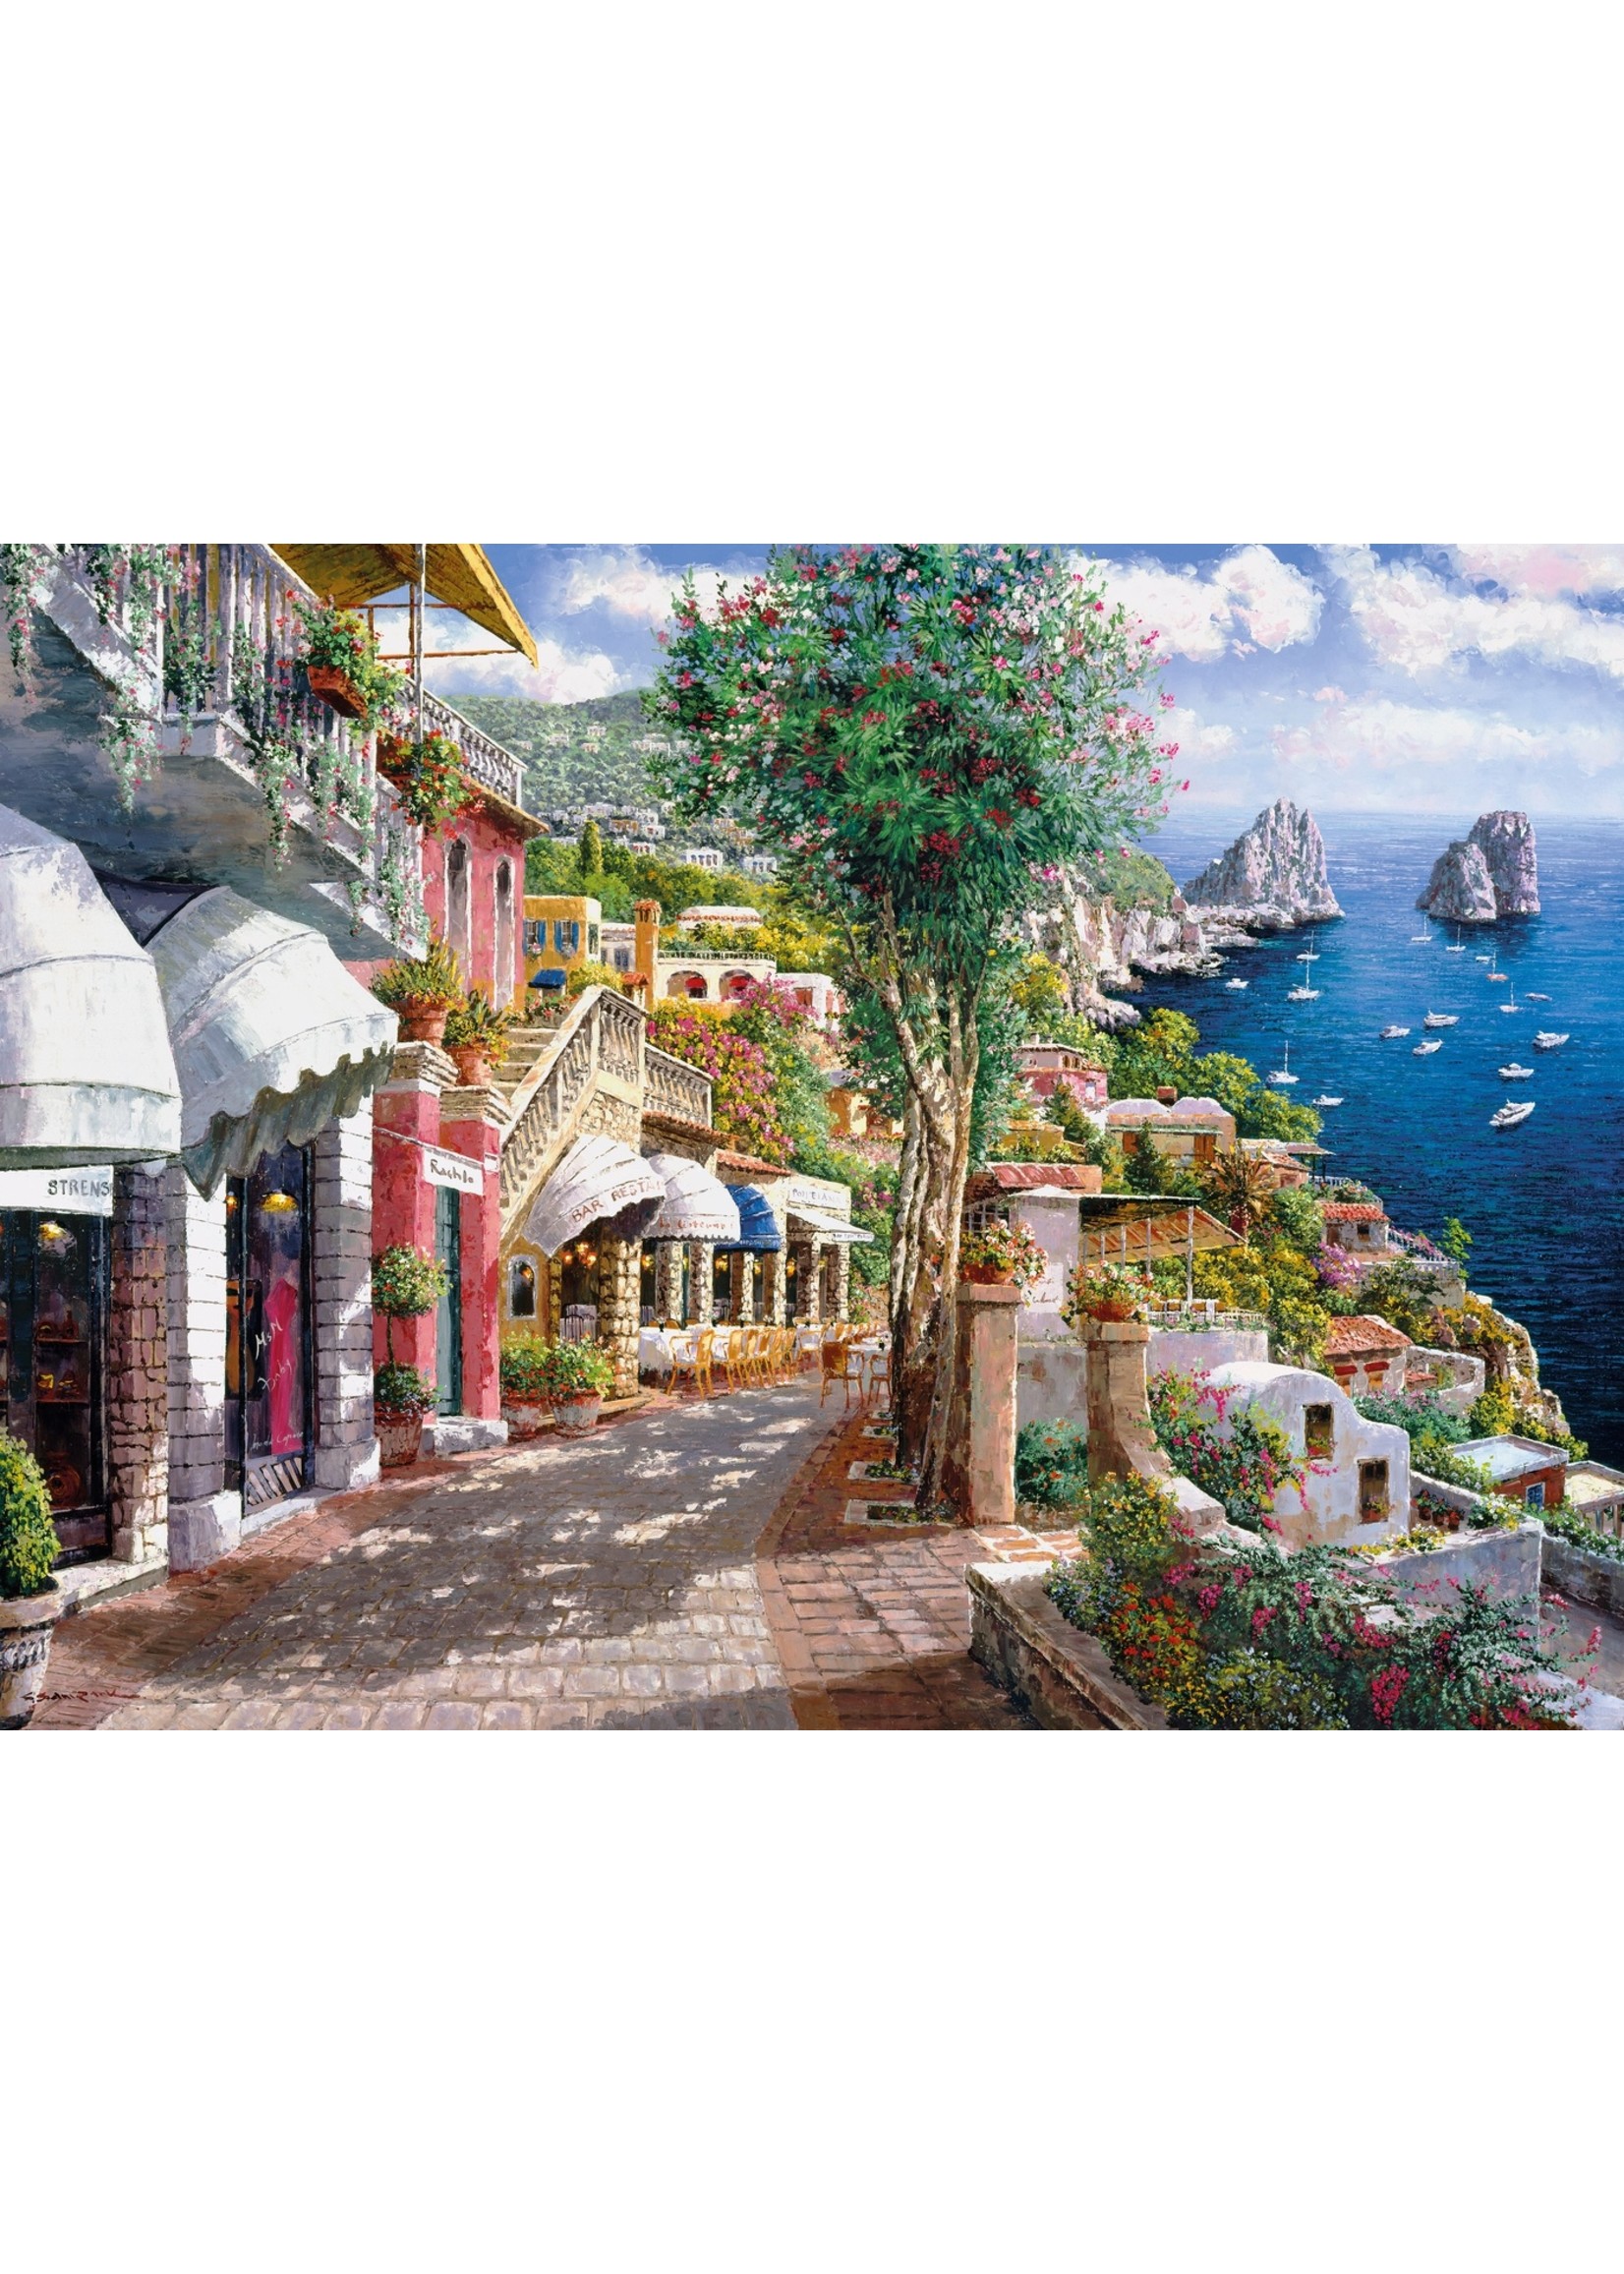 Clementoni Capri - 1000 Piece Puzzle